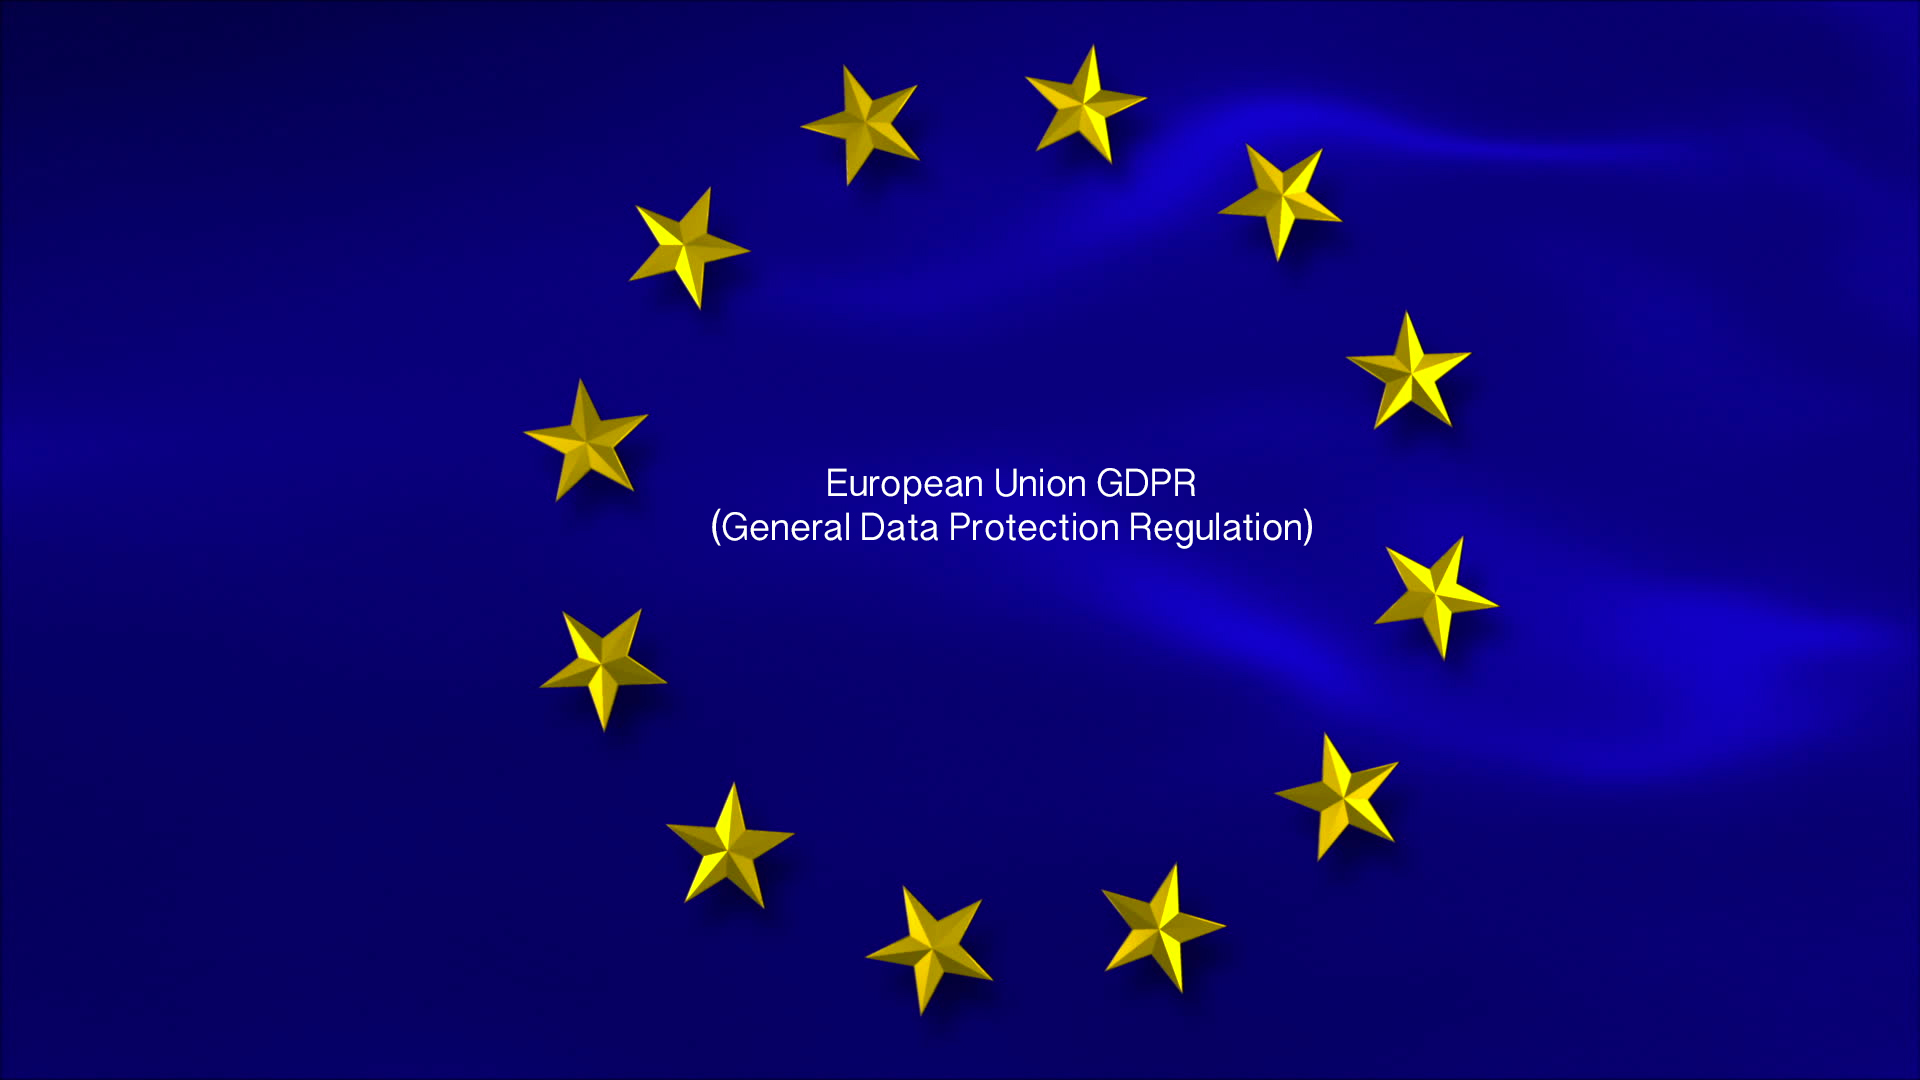 RainMachine complies with European Union GDPR (General Data Protection Regulation)